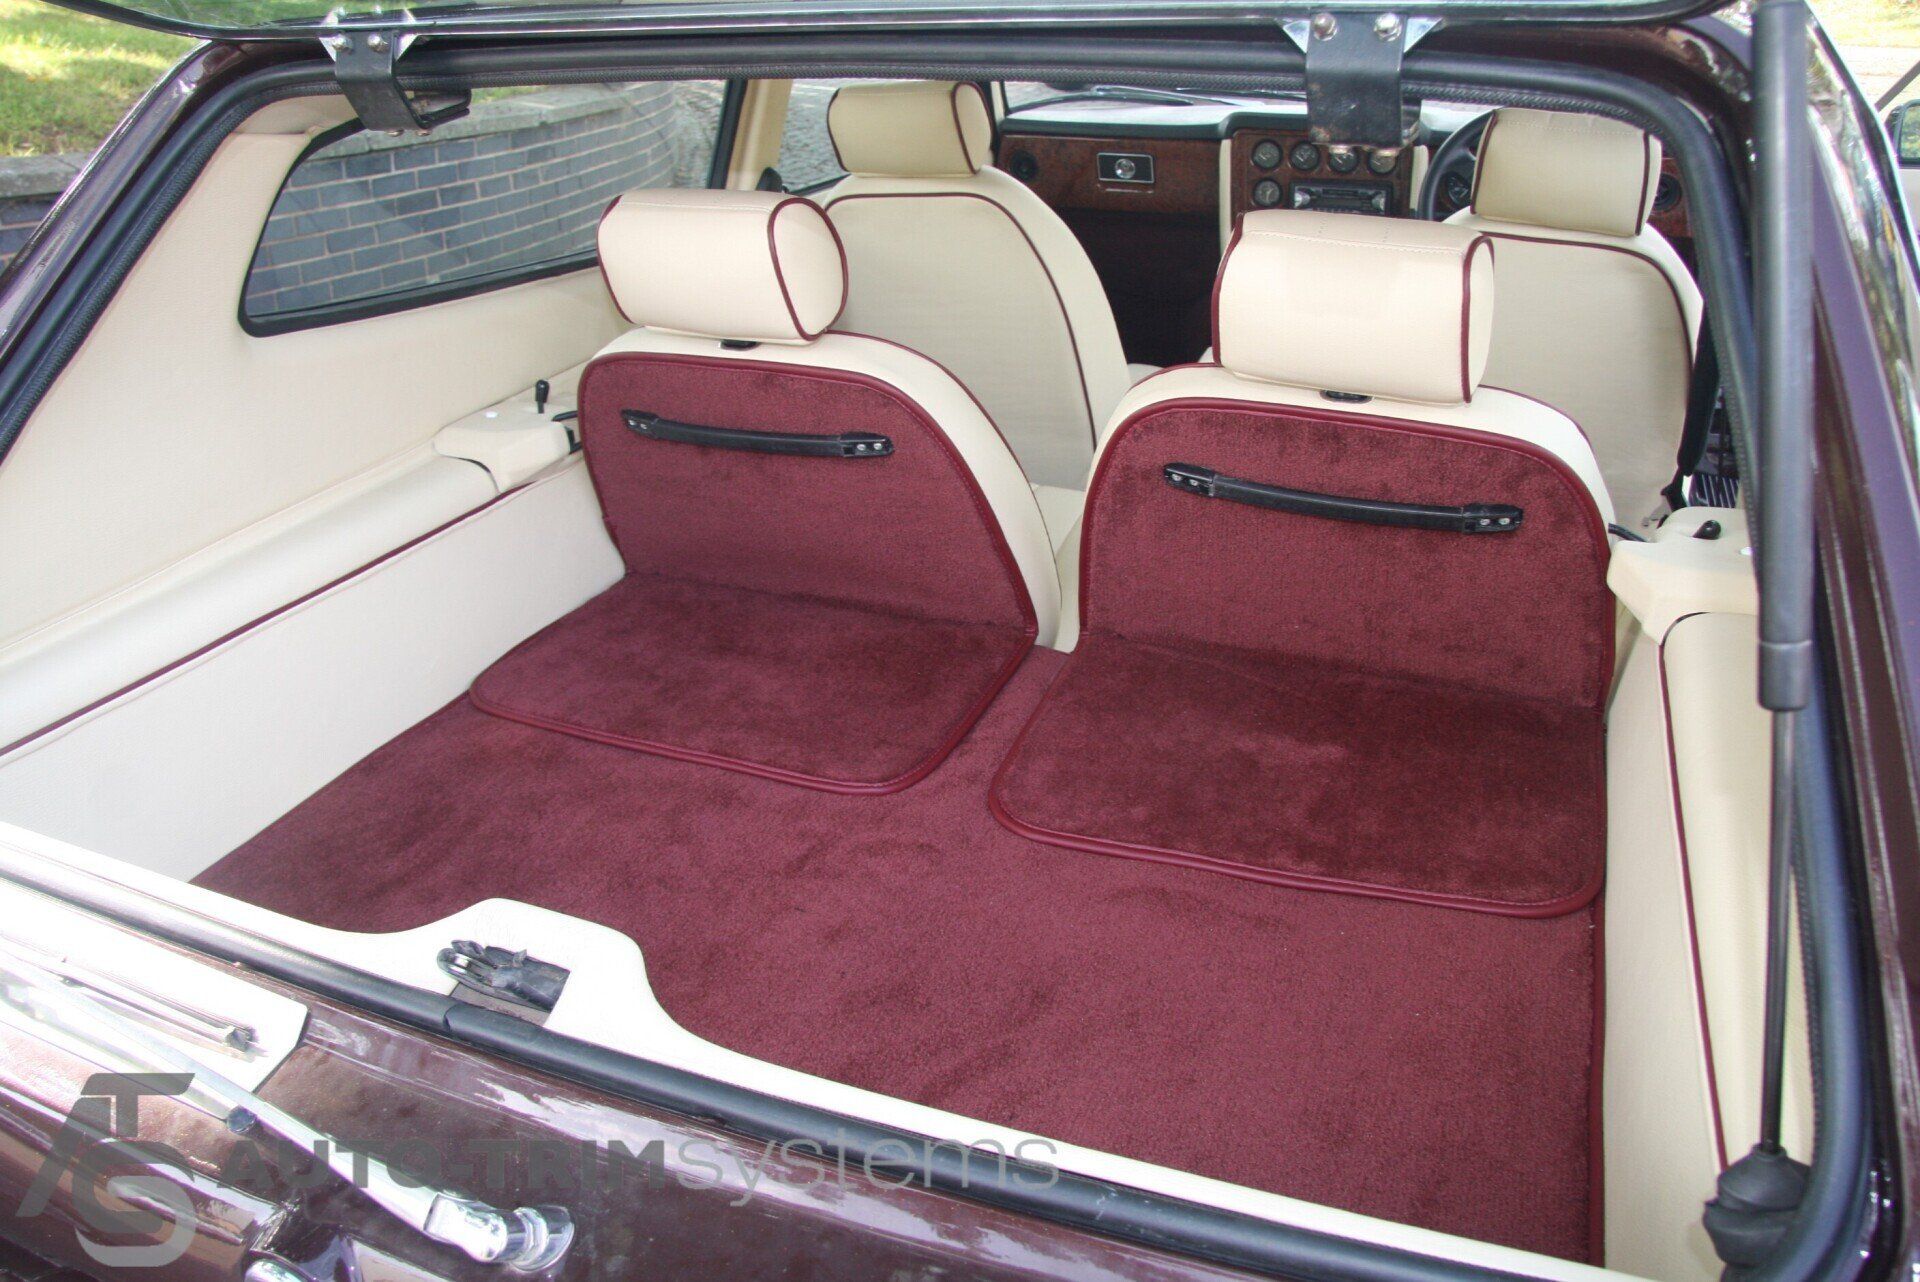 Bespoke plush red carpet in a Reliant Scimitar